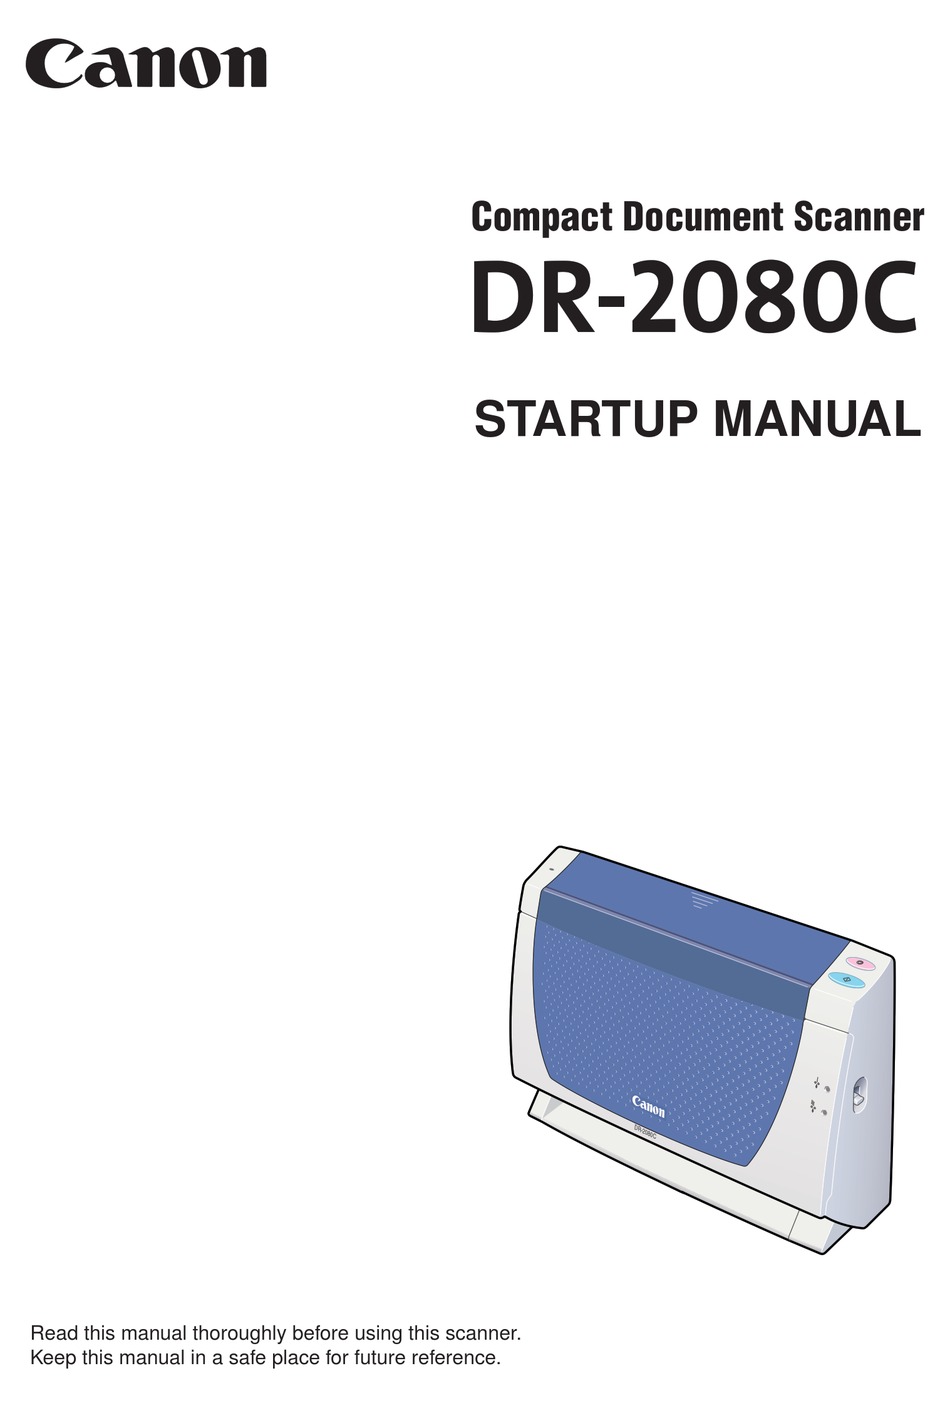 CANON DR-2080C STARTUP SCANNER STARTUP MANUAL | ManualsLib